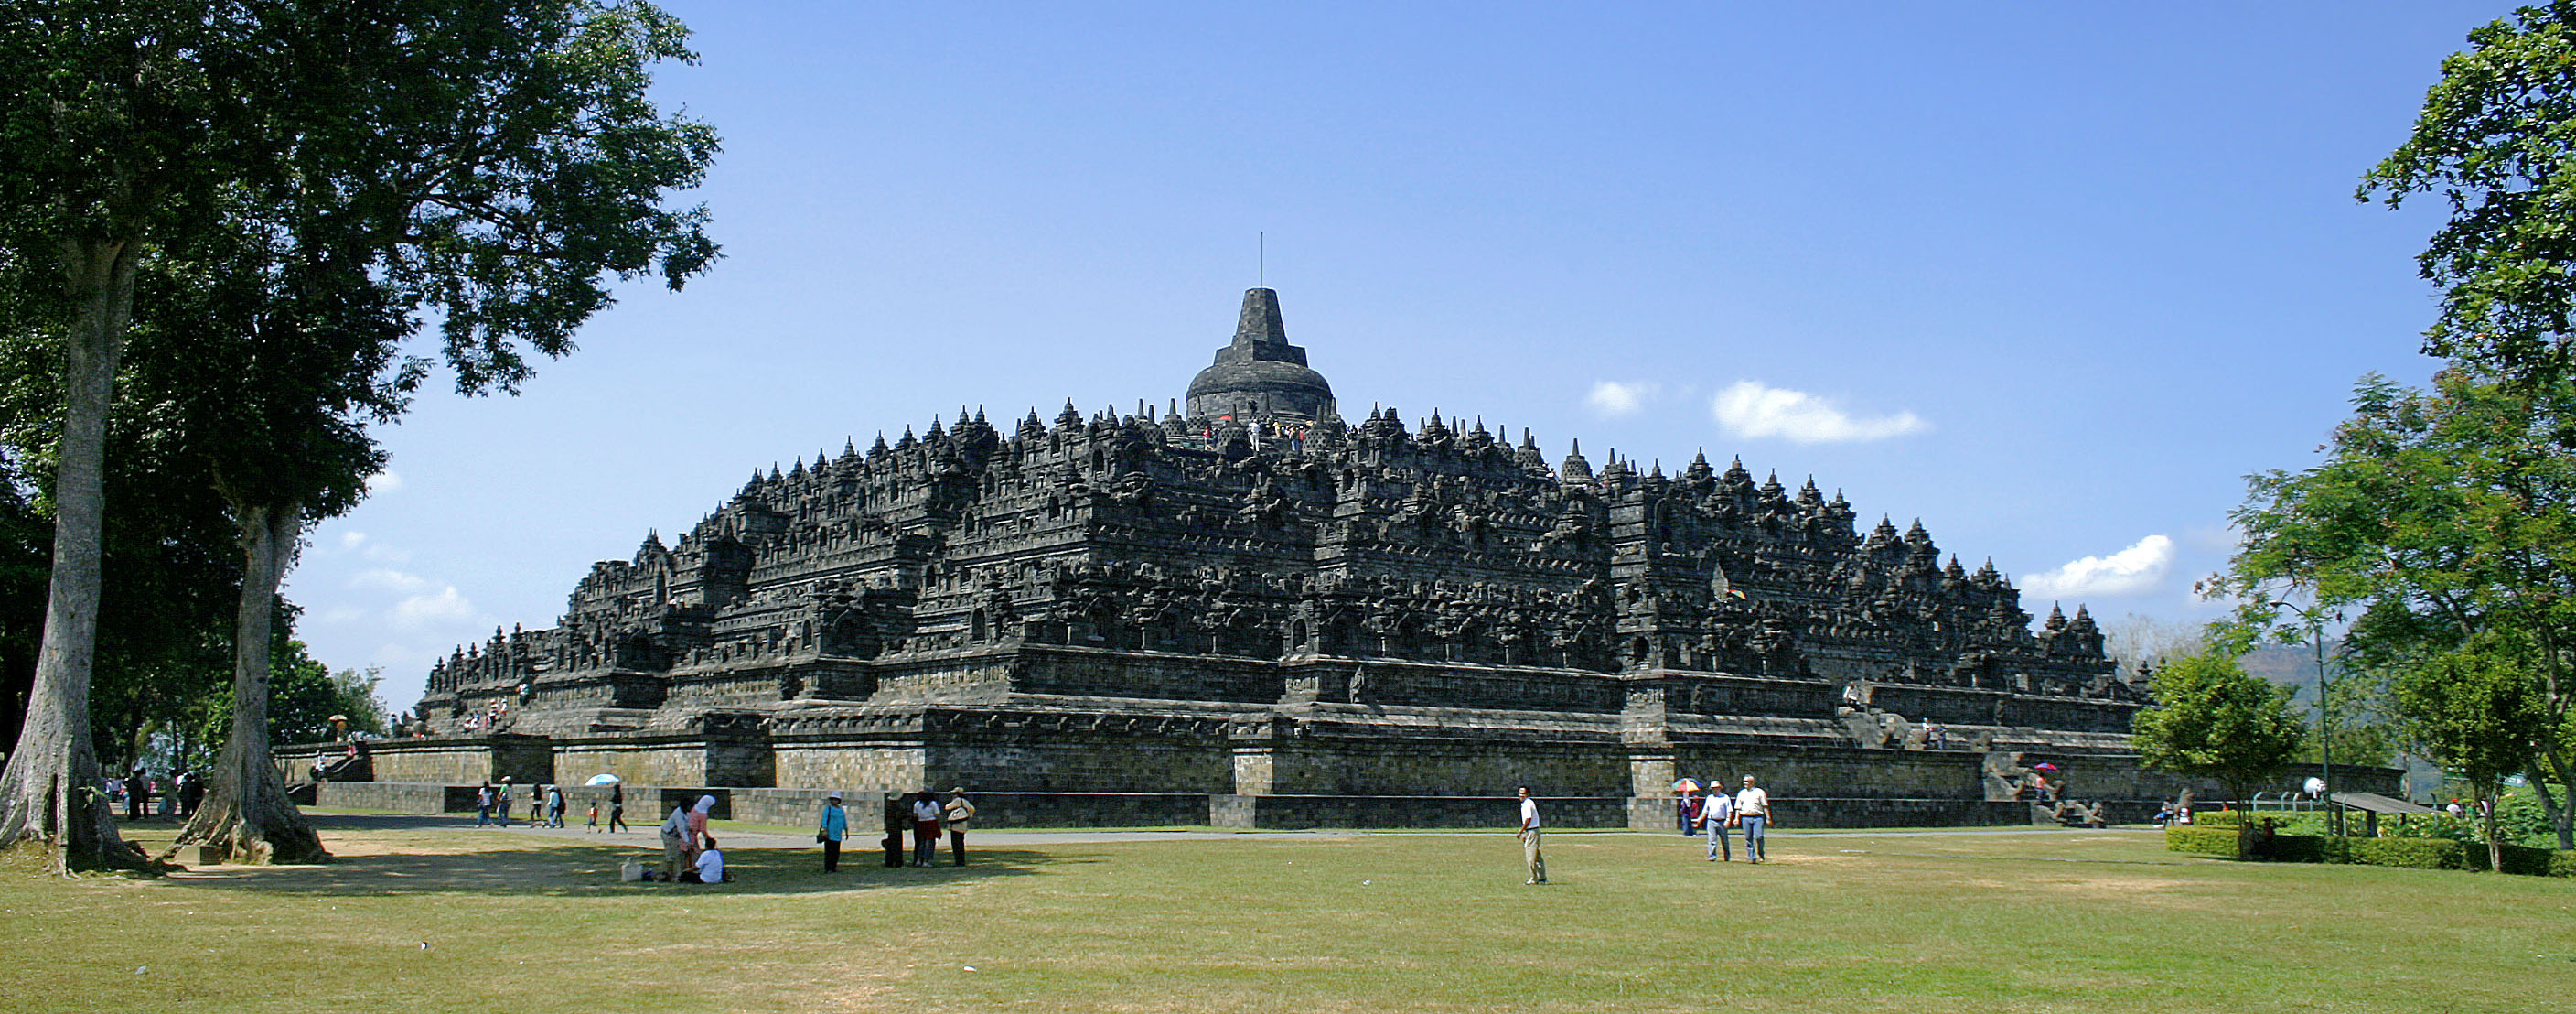 Borobudur wikimedia commons, Wikimedia commons, Borobudur, 2820x1110 Dual Screen Desktop